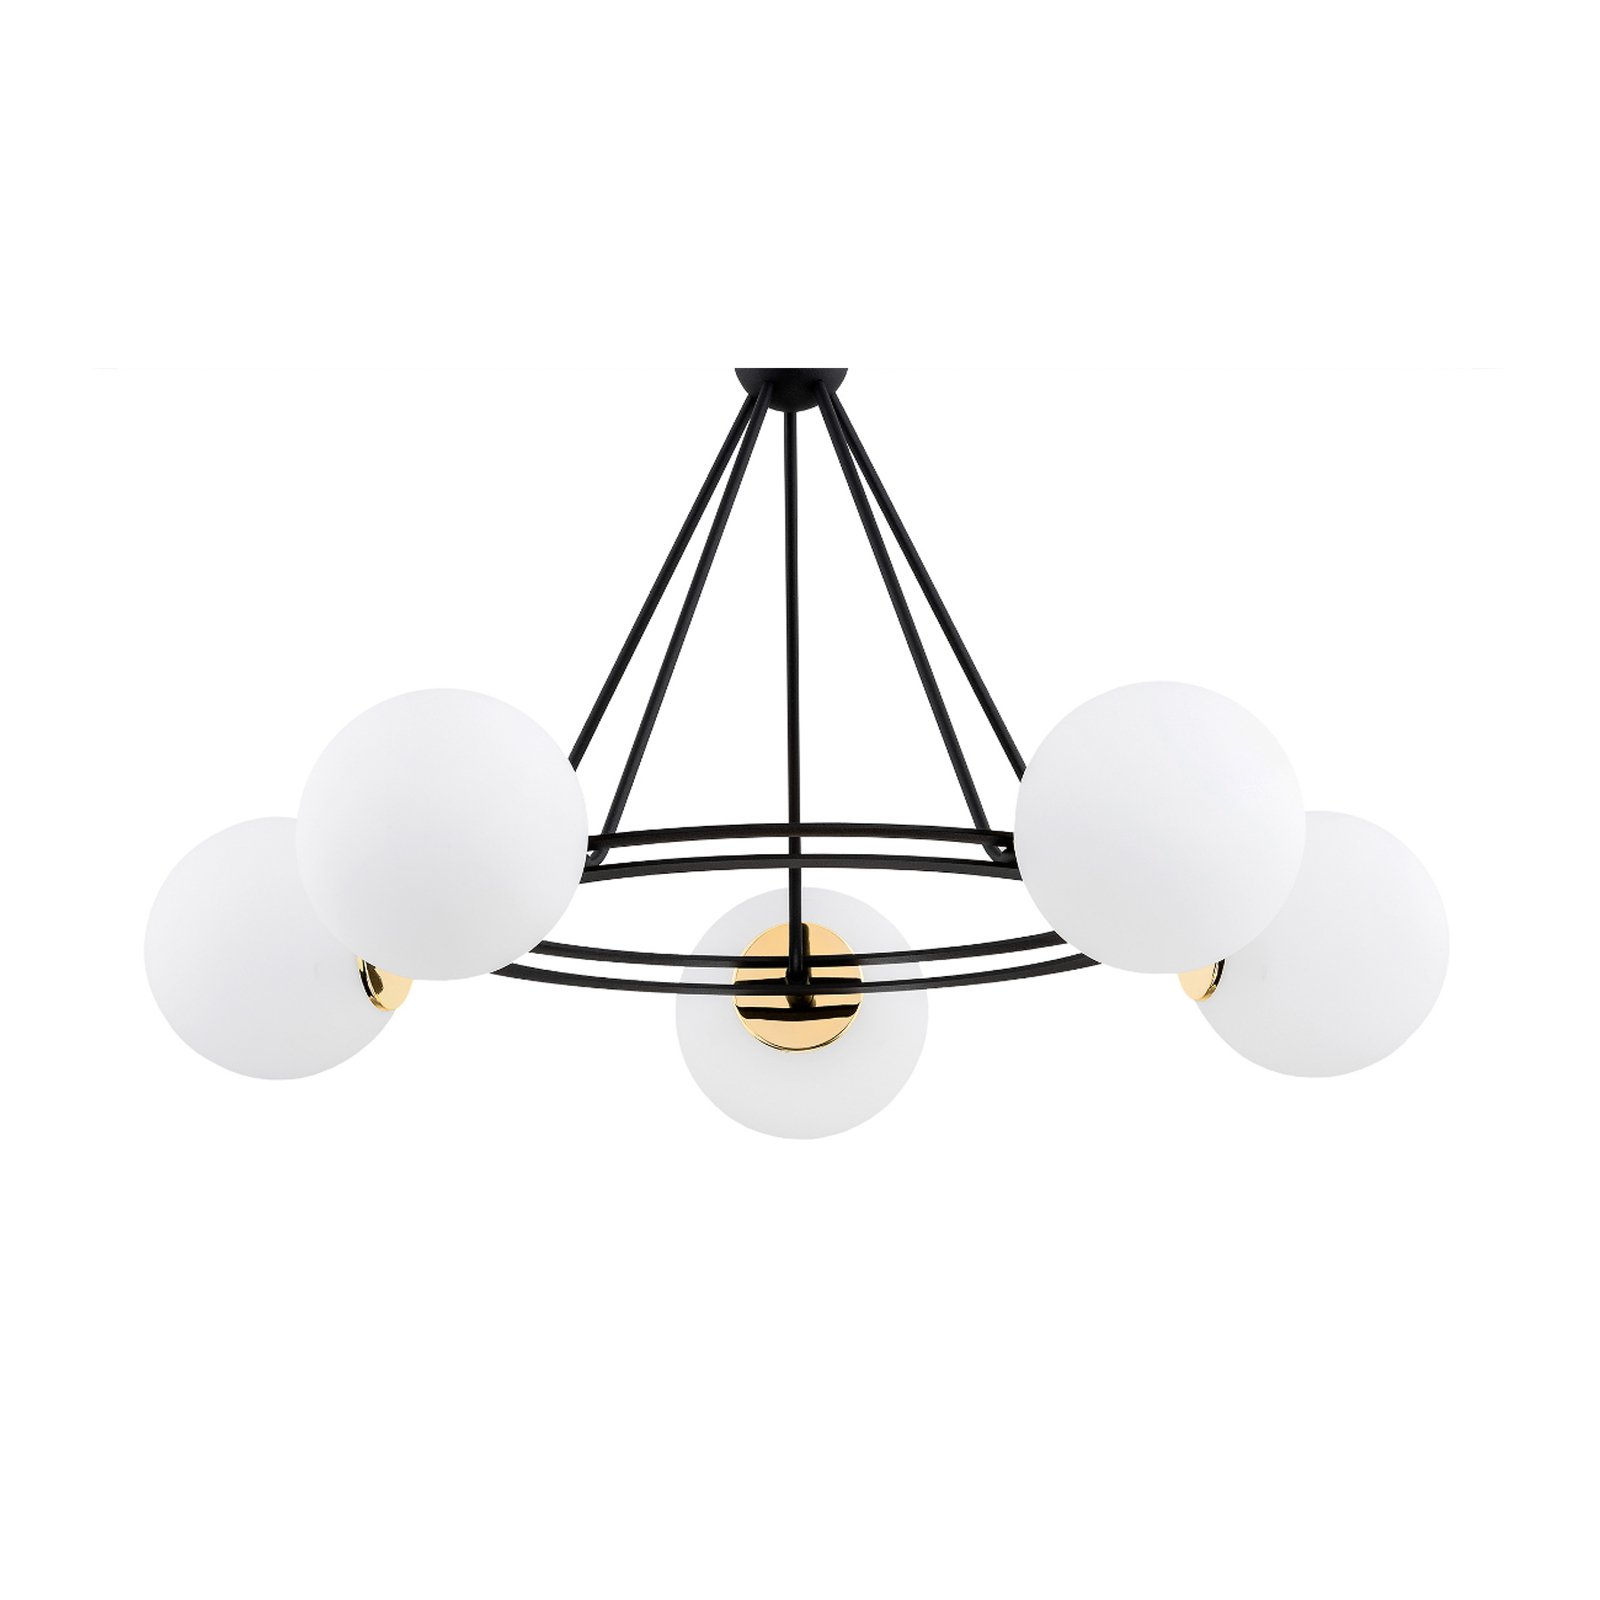 Amalfi pendant light, 5-bulb, white glass shades